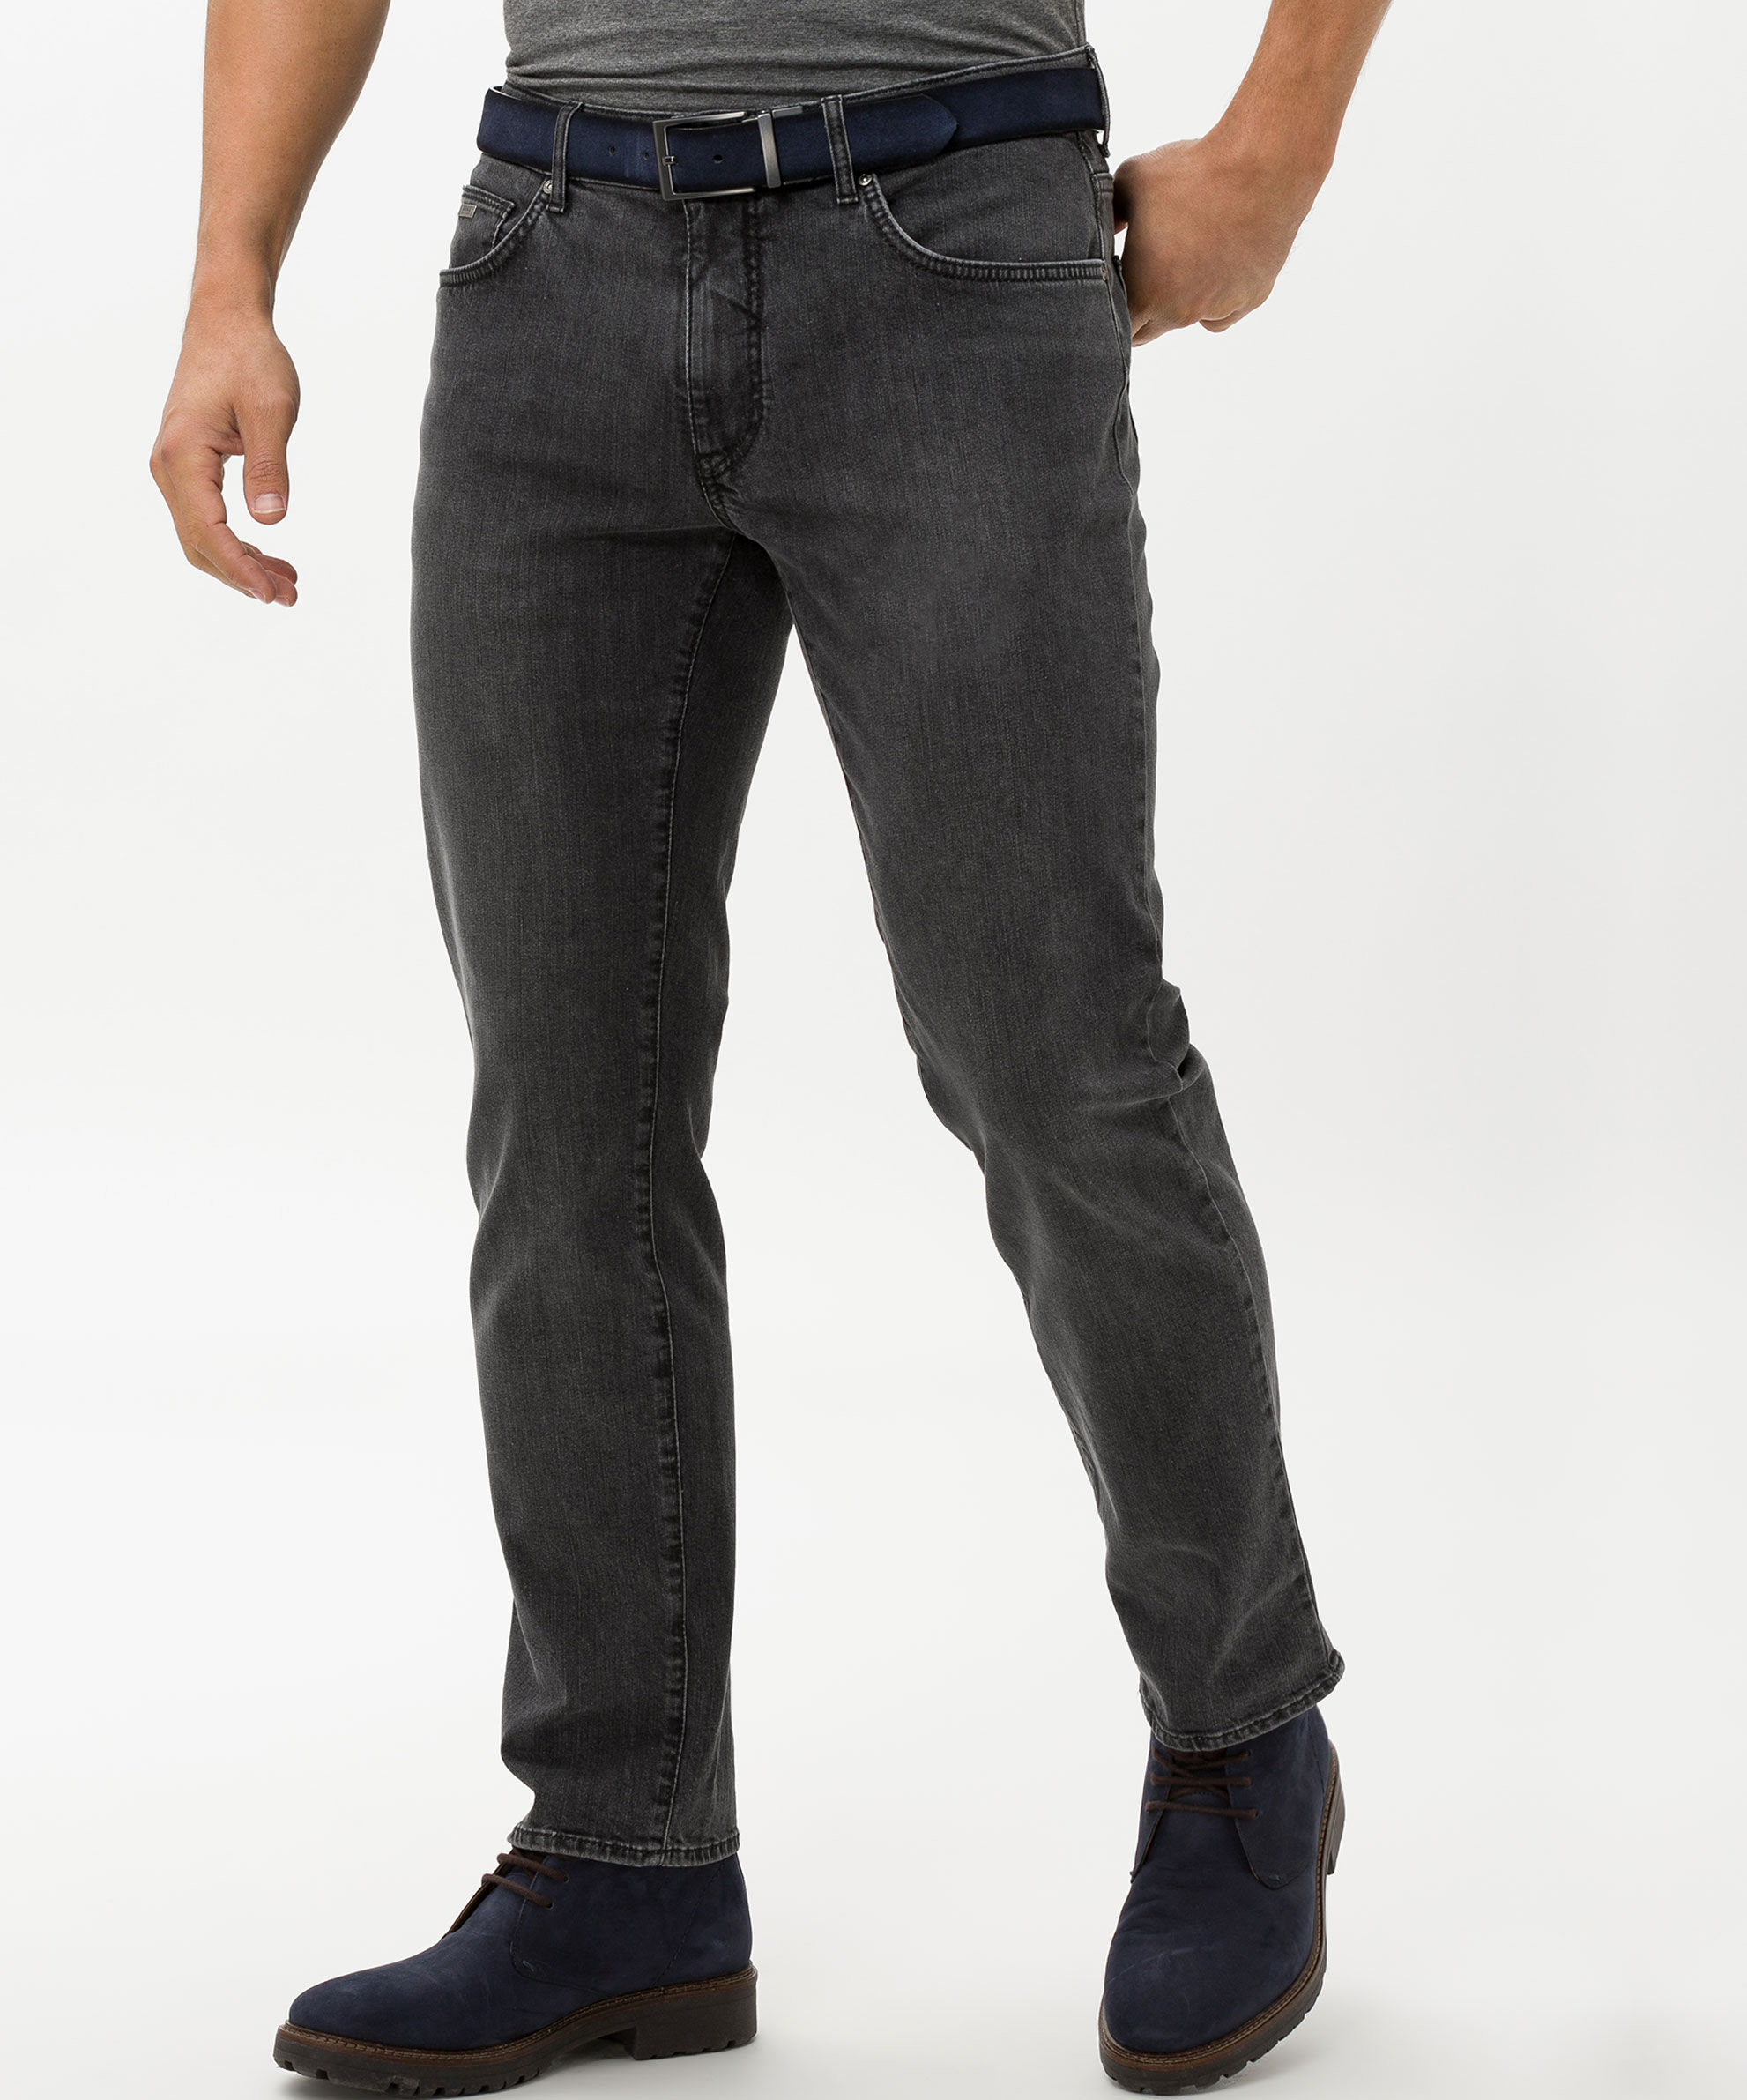 Herren Pocket grau Style Brax Jeans 07960720 80 05 0070 Hose Cadiz Five